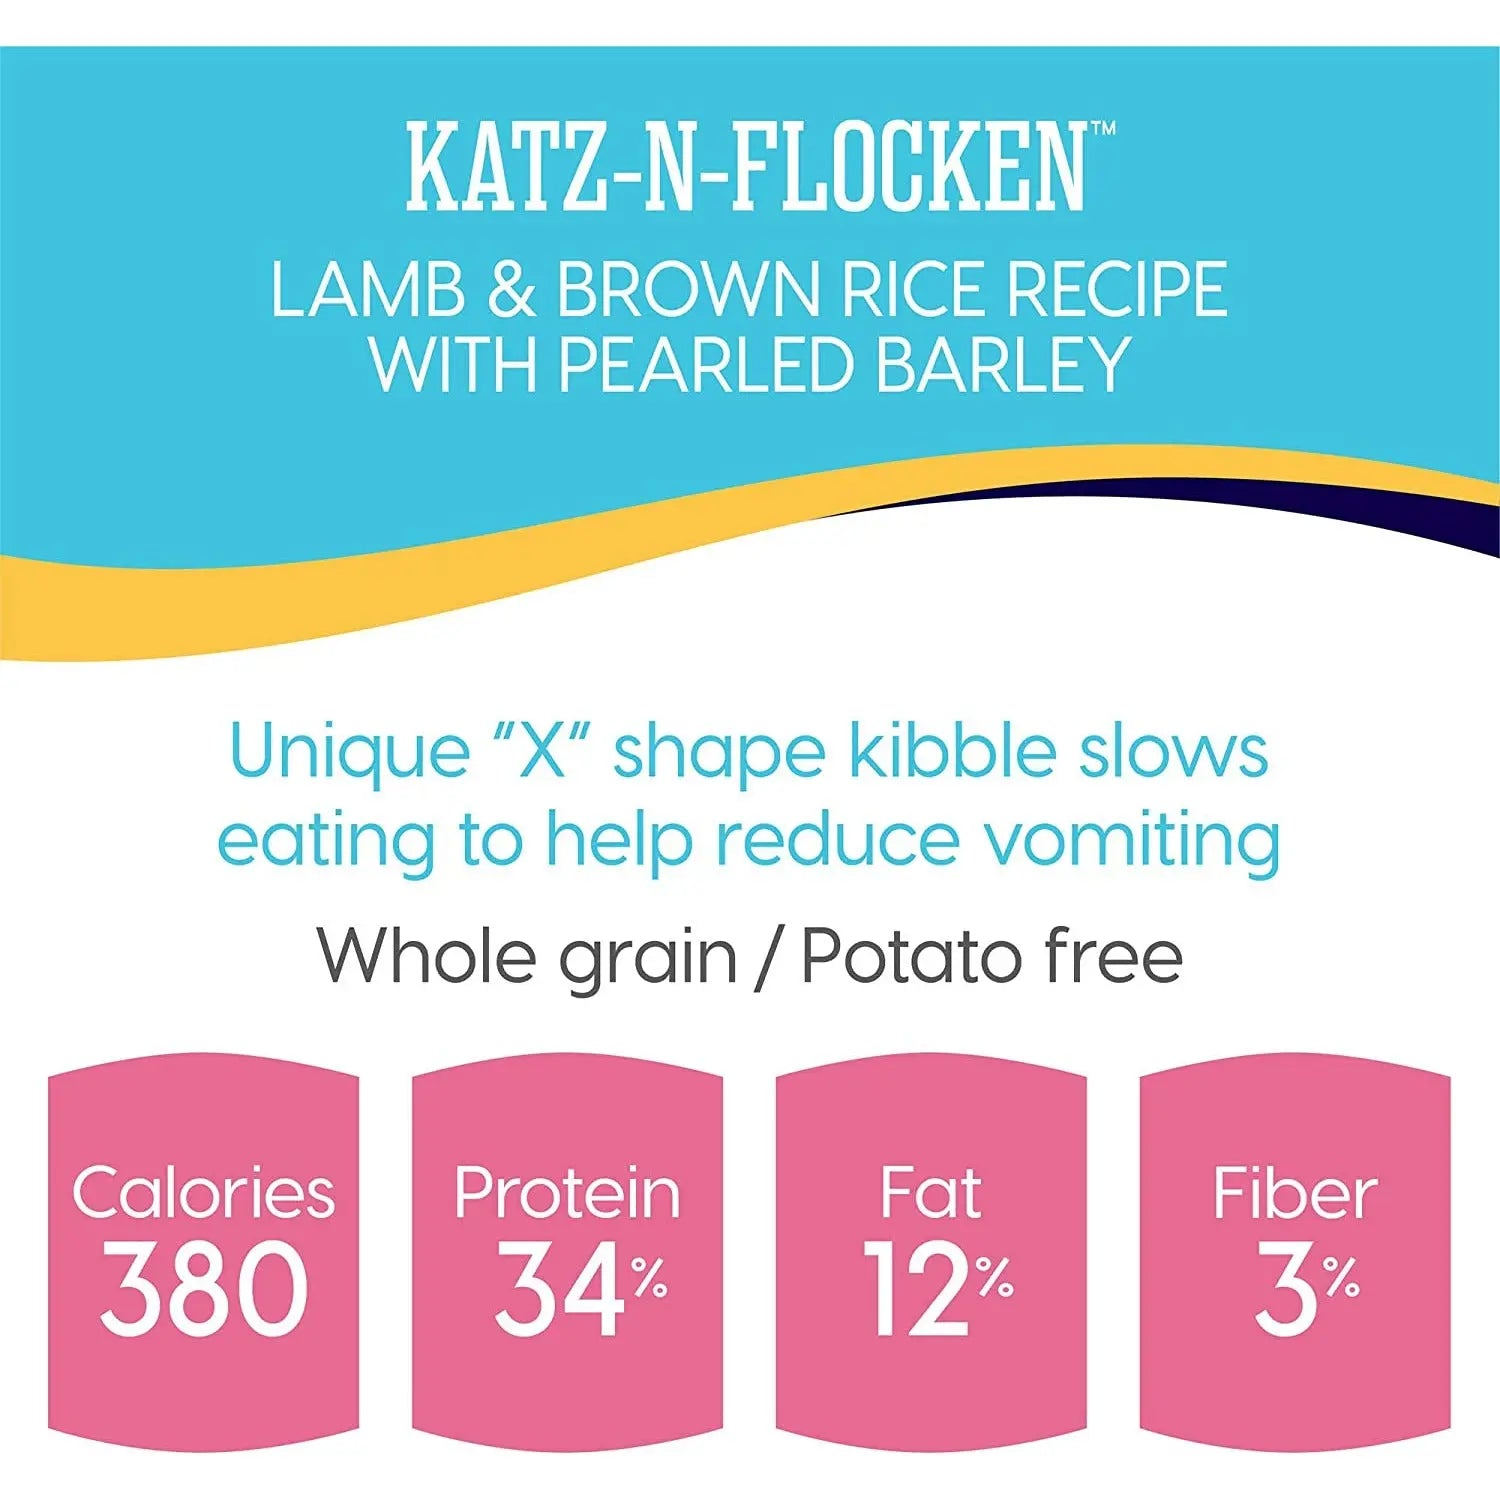 Solid Gold® Katz-N-Flocken® Potato Free Lamb, Brown Rice, & Pearled Barley Cat Food Solid Gold